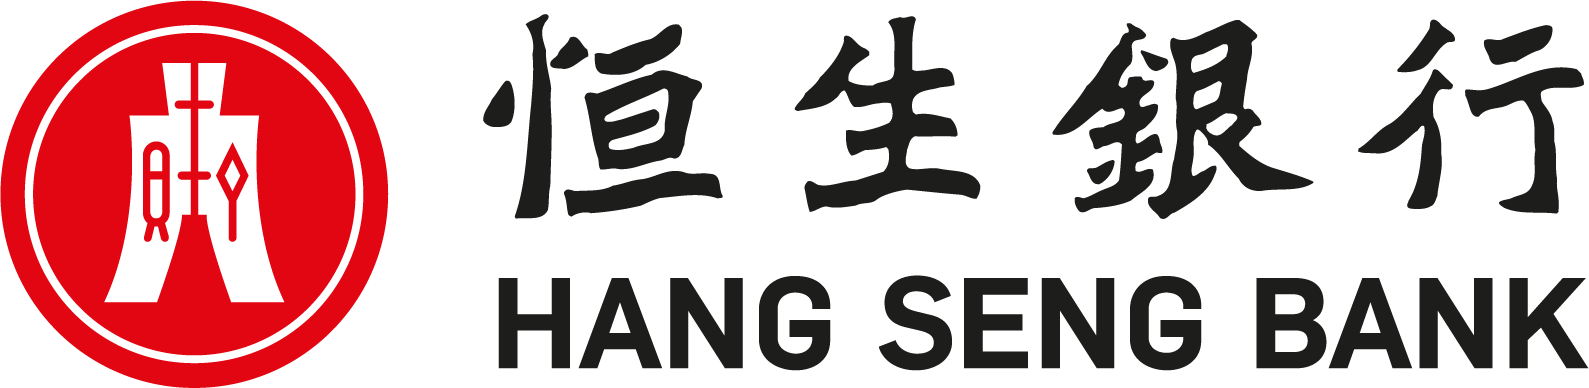 Hang Seng Bank Logo png